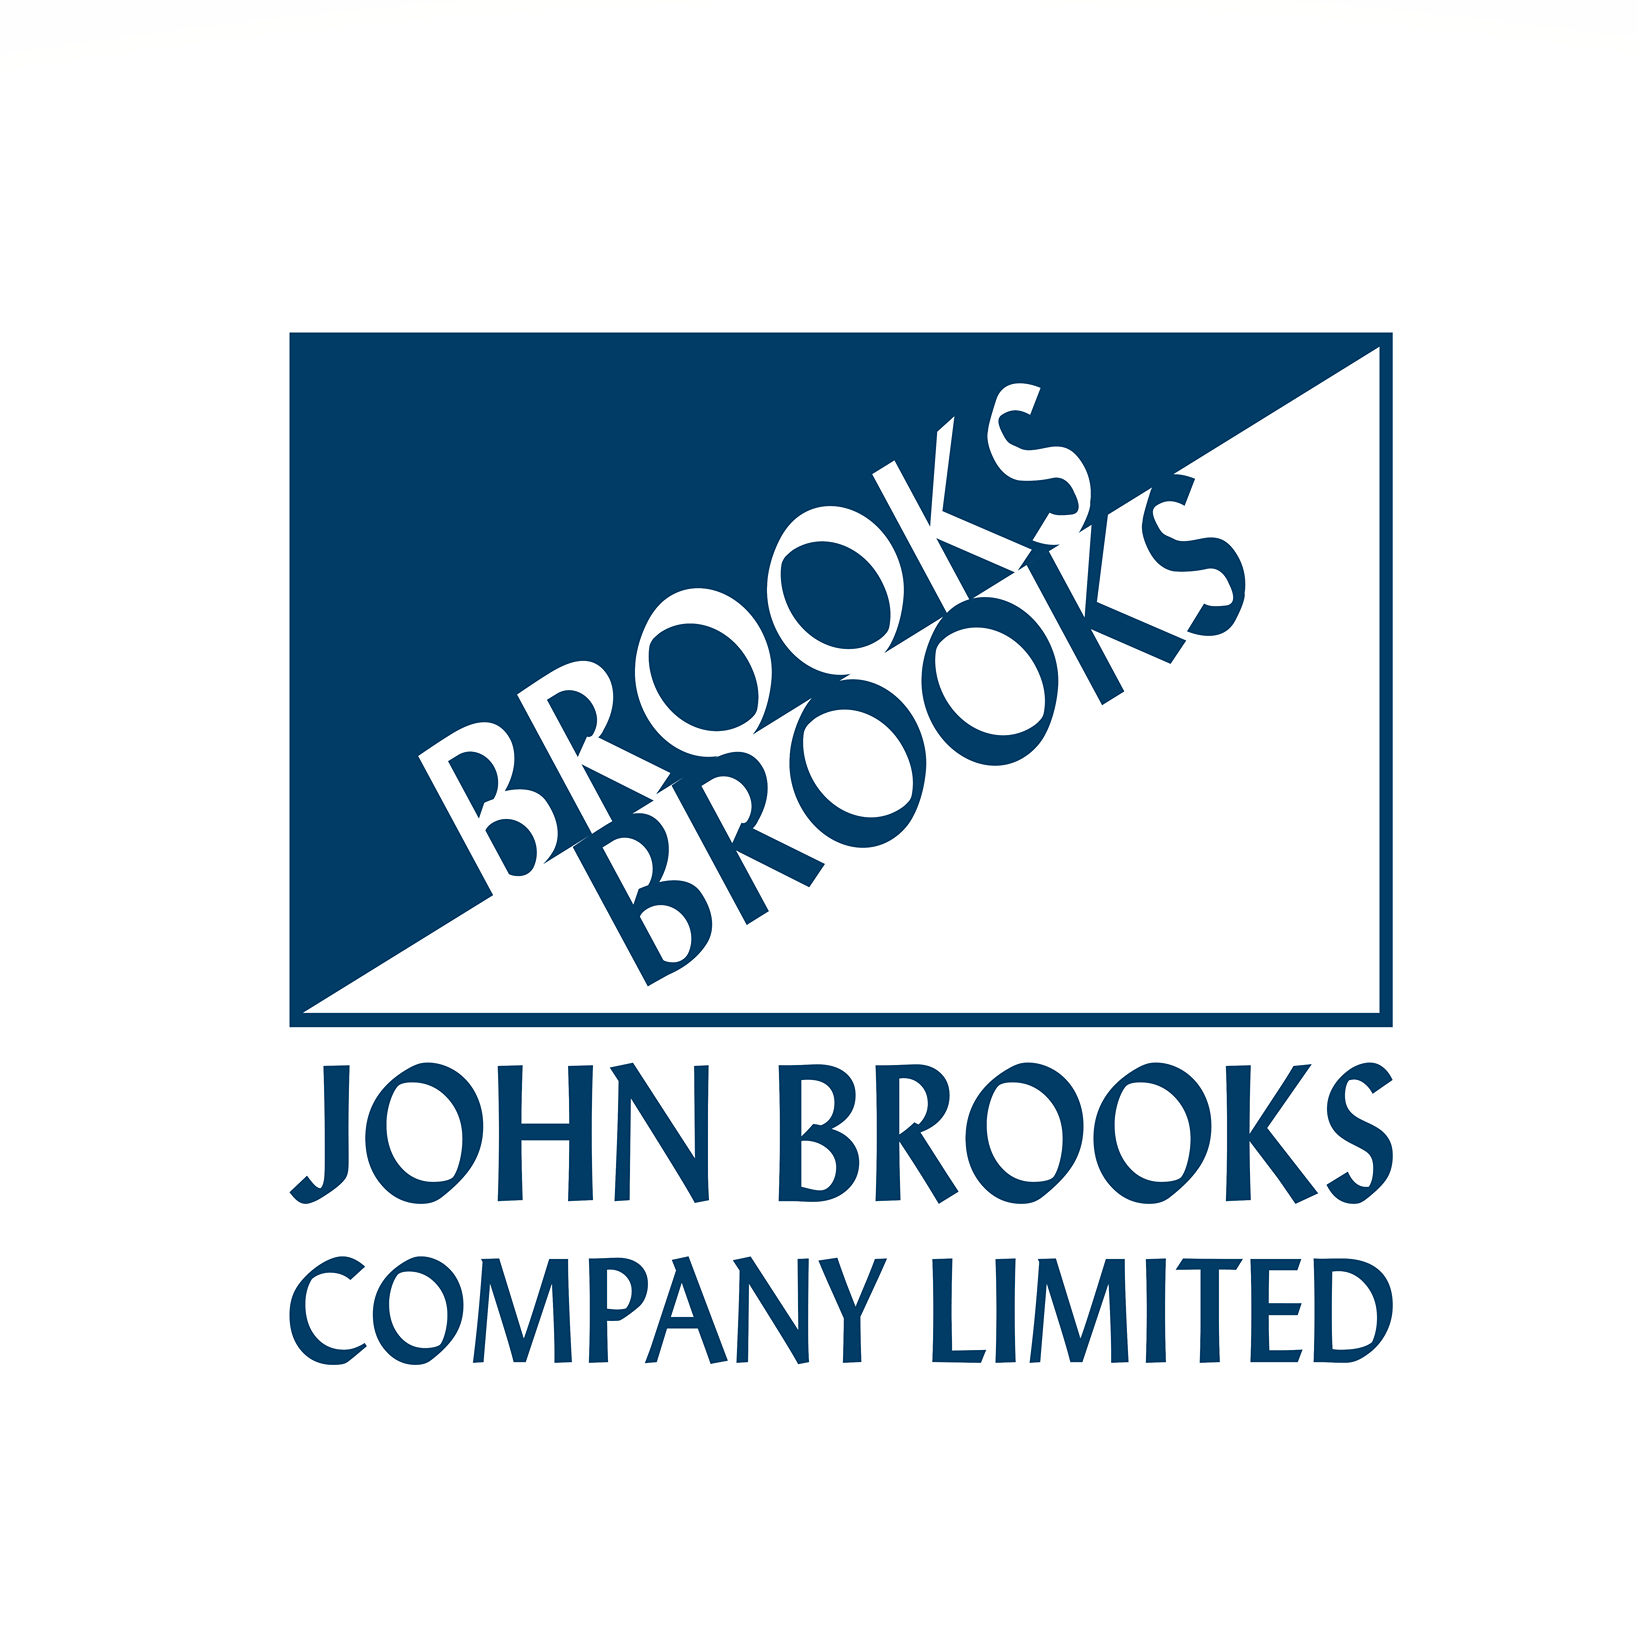 John Brooks Company Limited logo